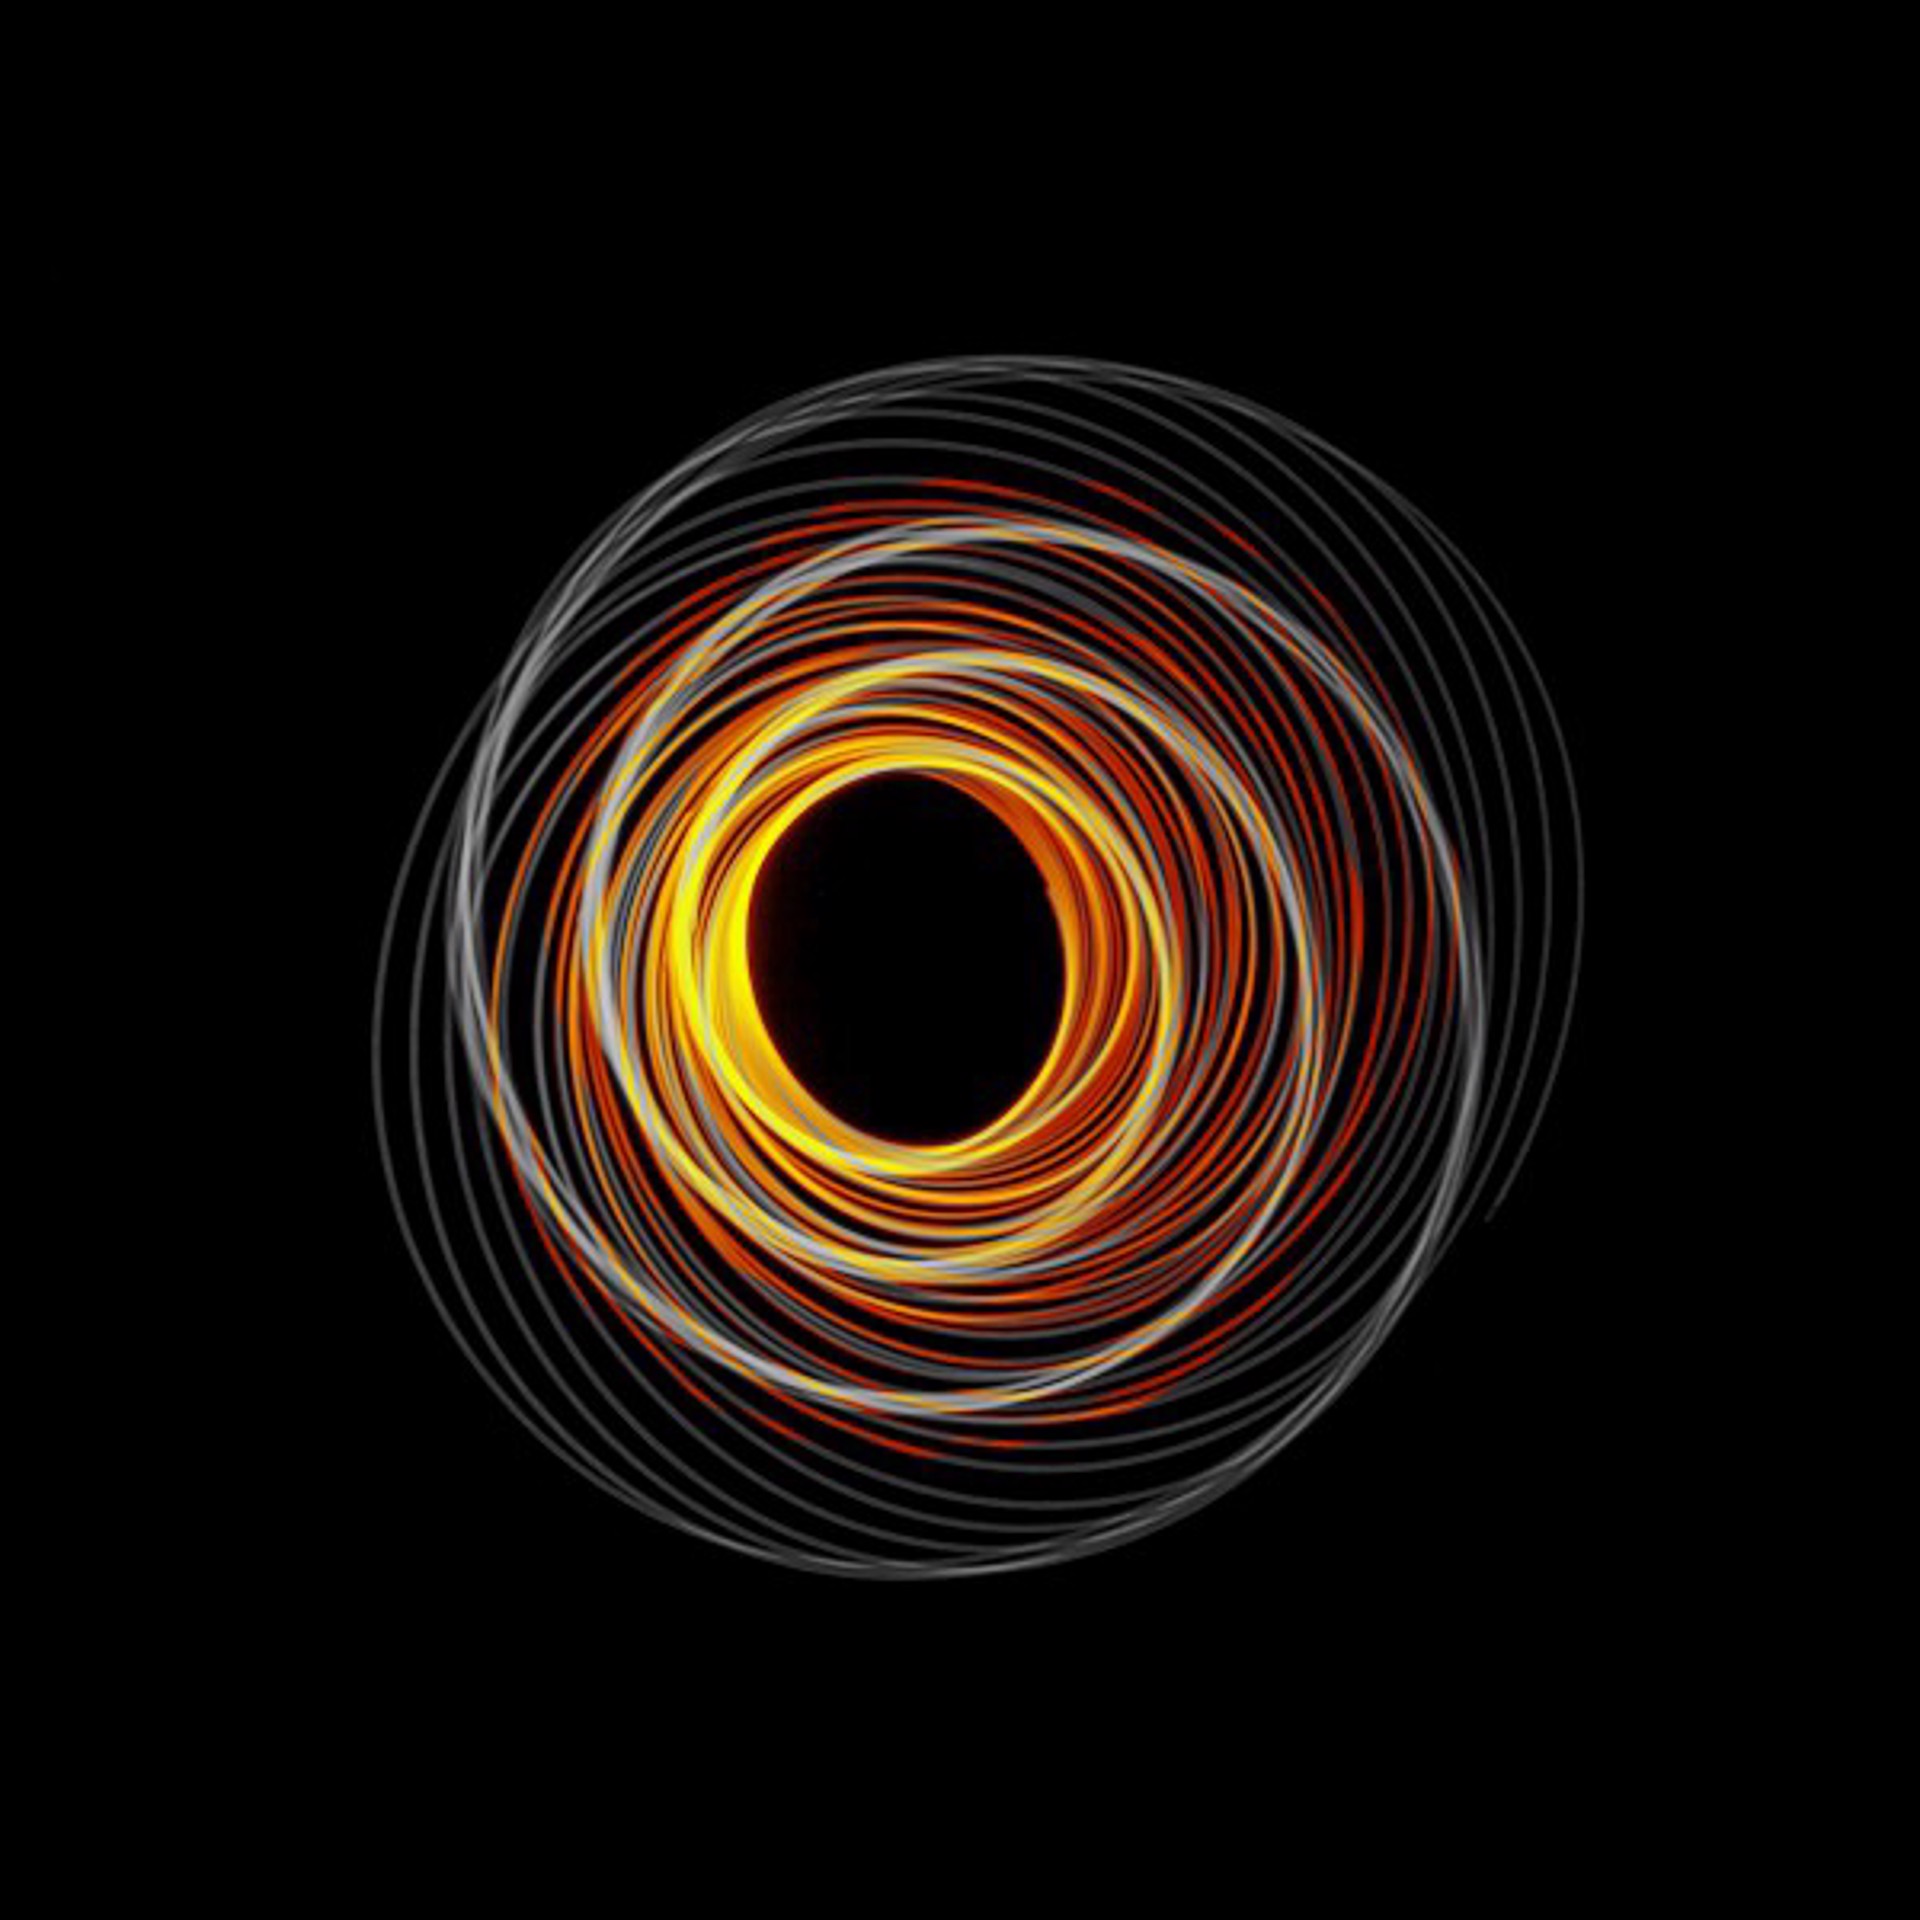 Iridescent Spiral by Jeff Robb